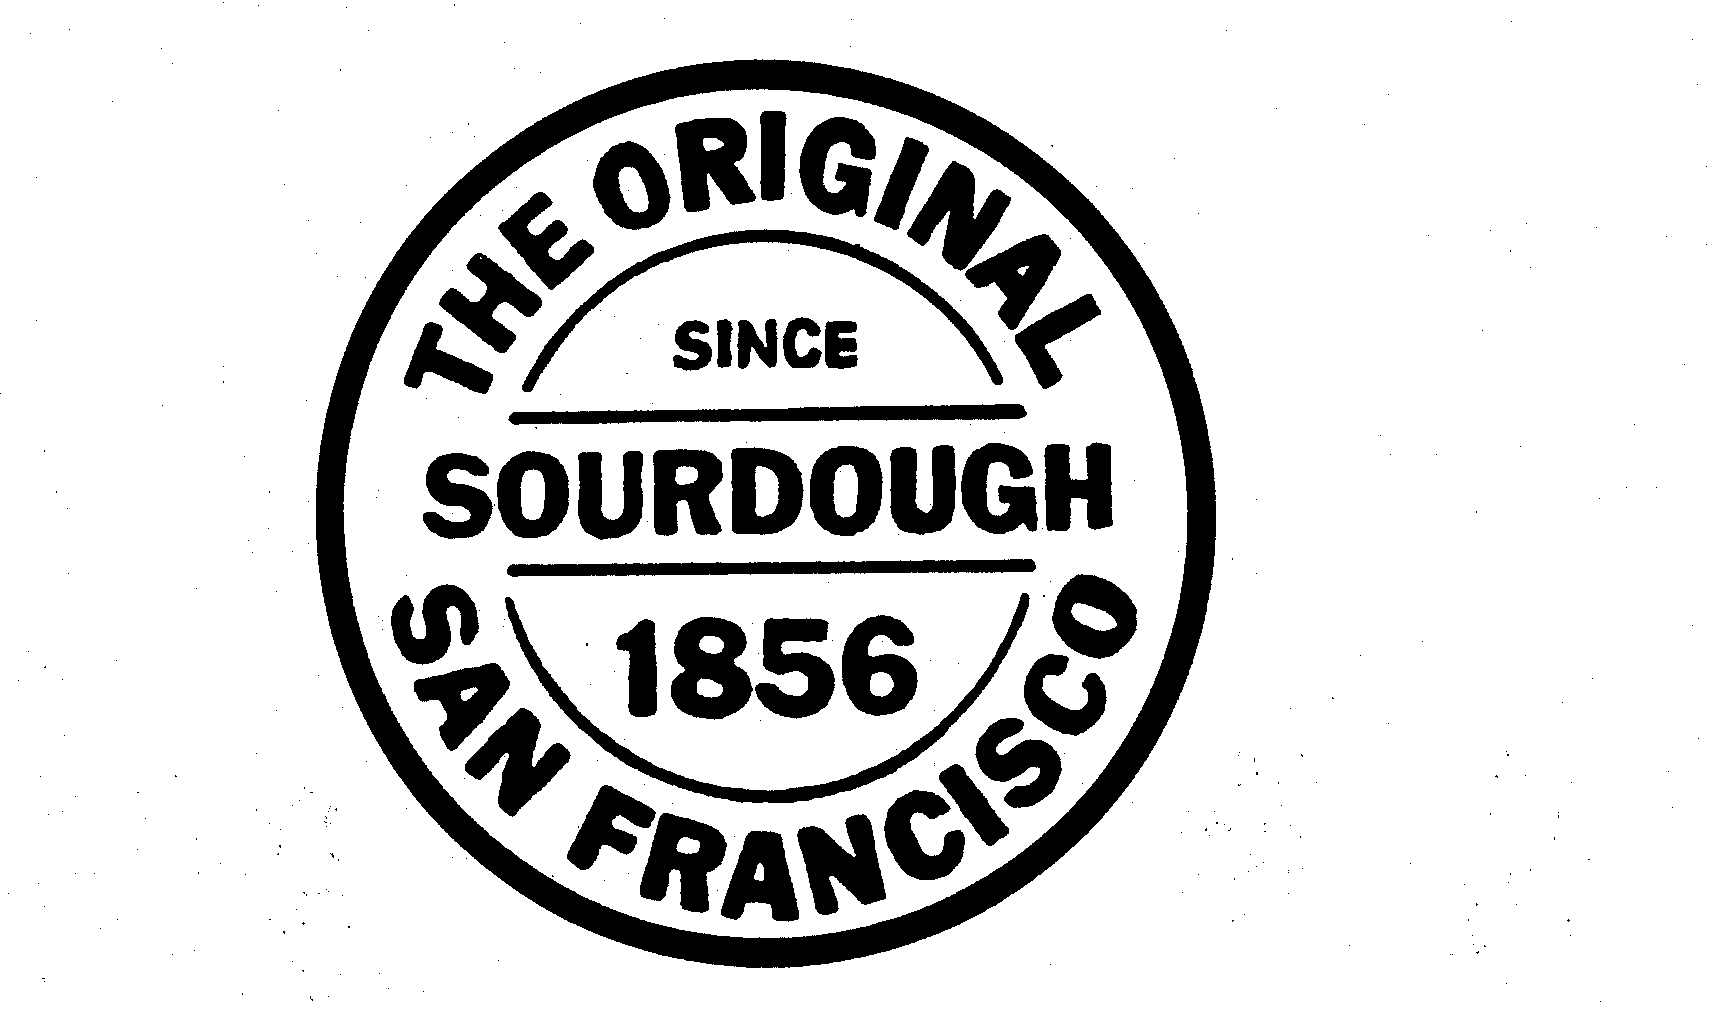  THE ORIGINAL SOURDOUGH SAN FRANCISCO SINCE 1856